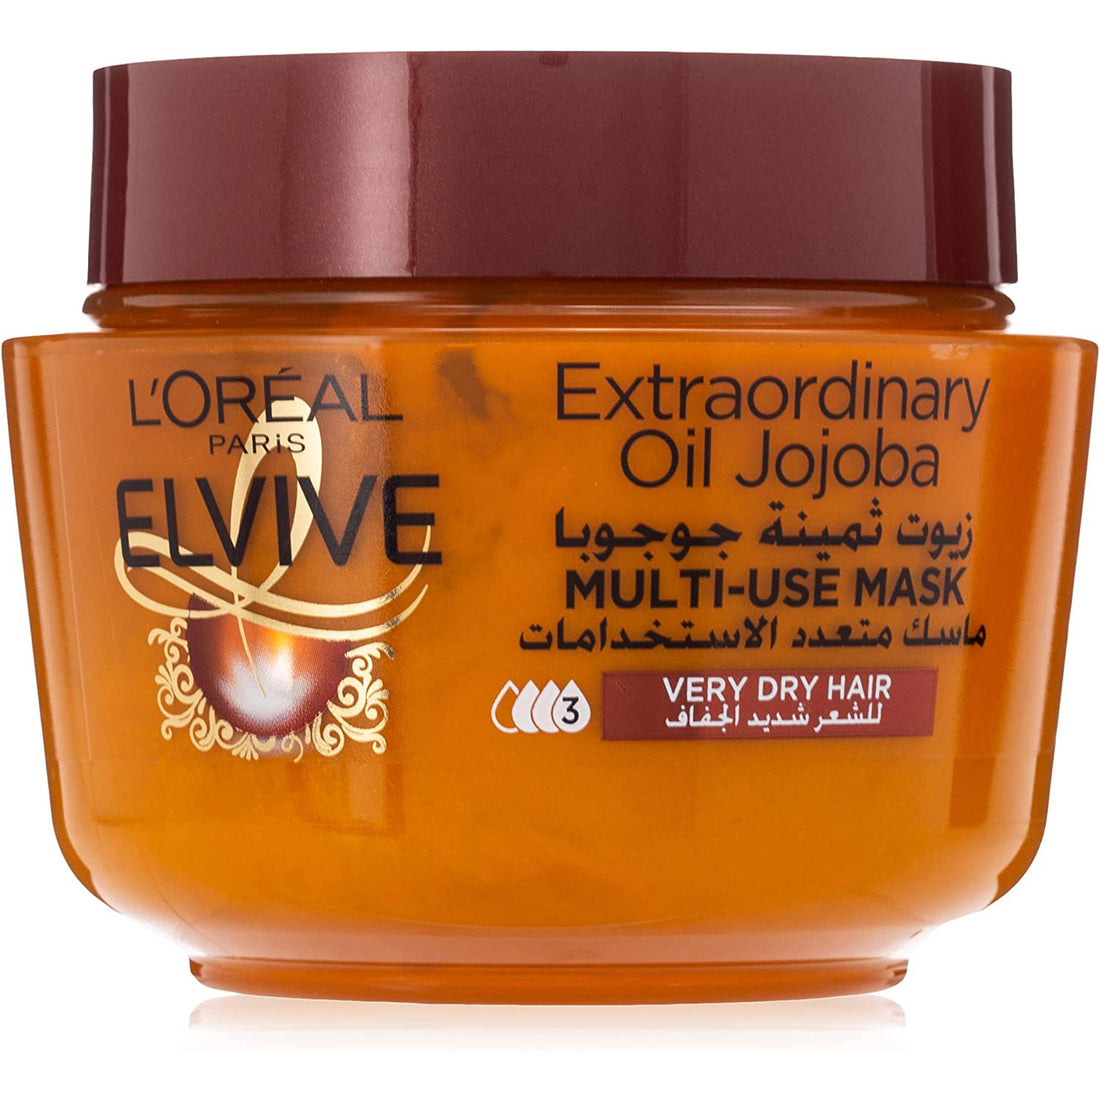 L’Oréal Paris Elvive Extraordinary Oil Nourishing Hair Treatment Mask - Dry Hair 300ml